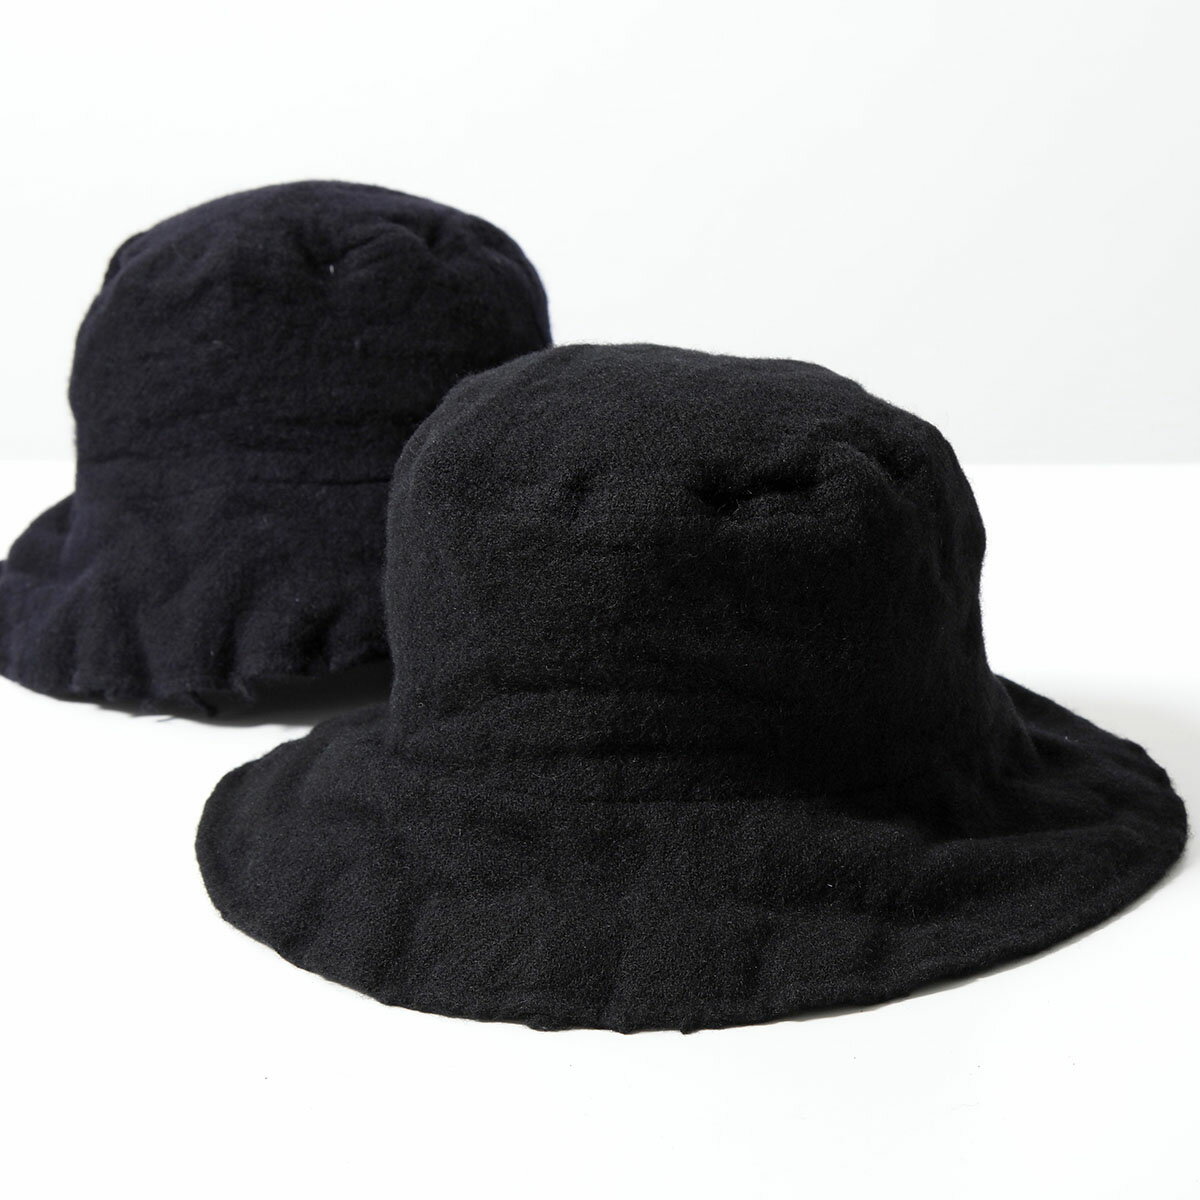 COMME des GARCONS SHIRT コムデギャルソン シャツ バケットハット FL K601 W23 メンズ ウール×ナイロン 帽子 カラー2色